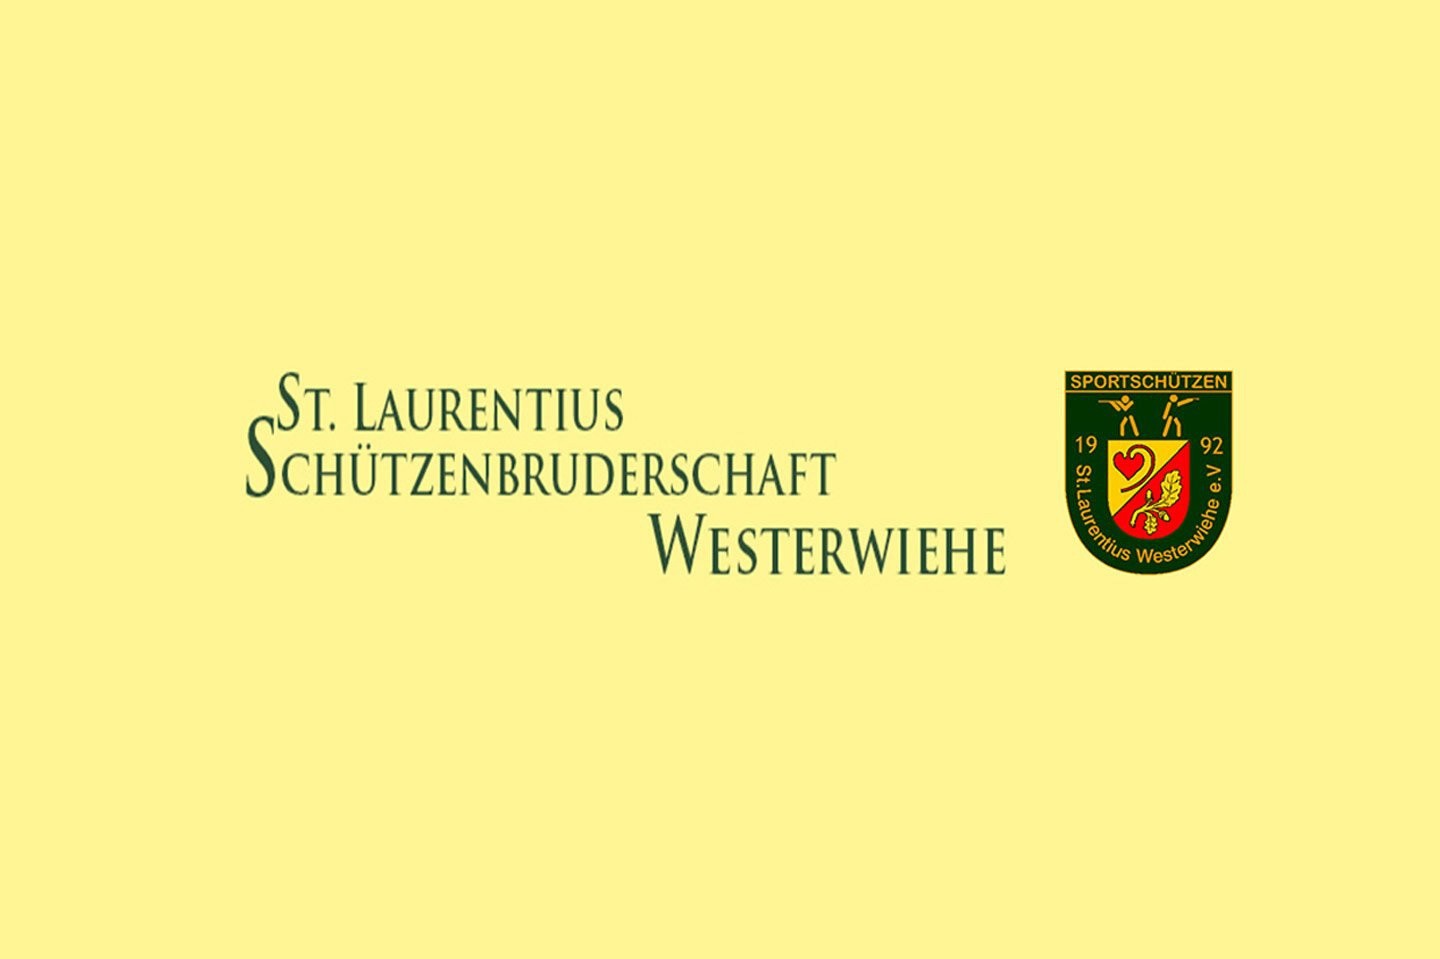 St. Laurentius Schützenbruderschaft